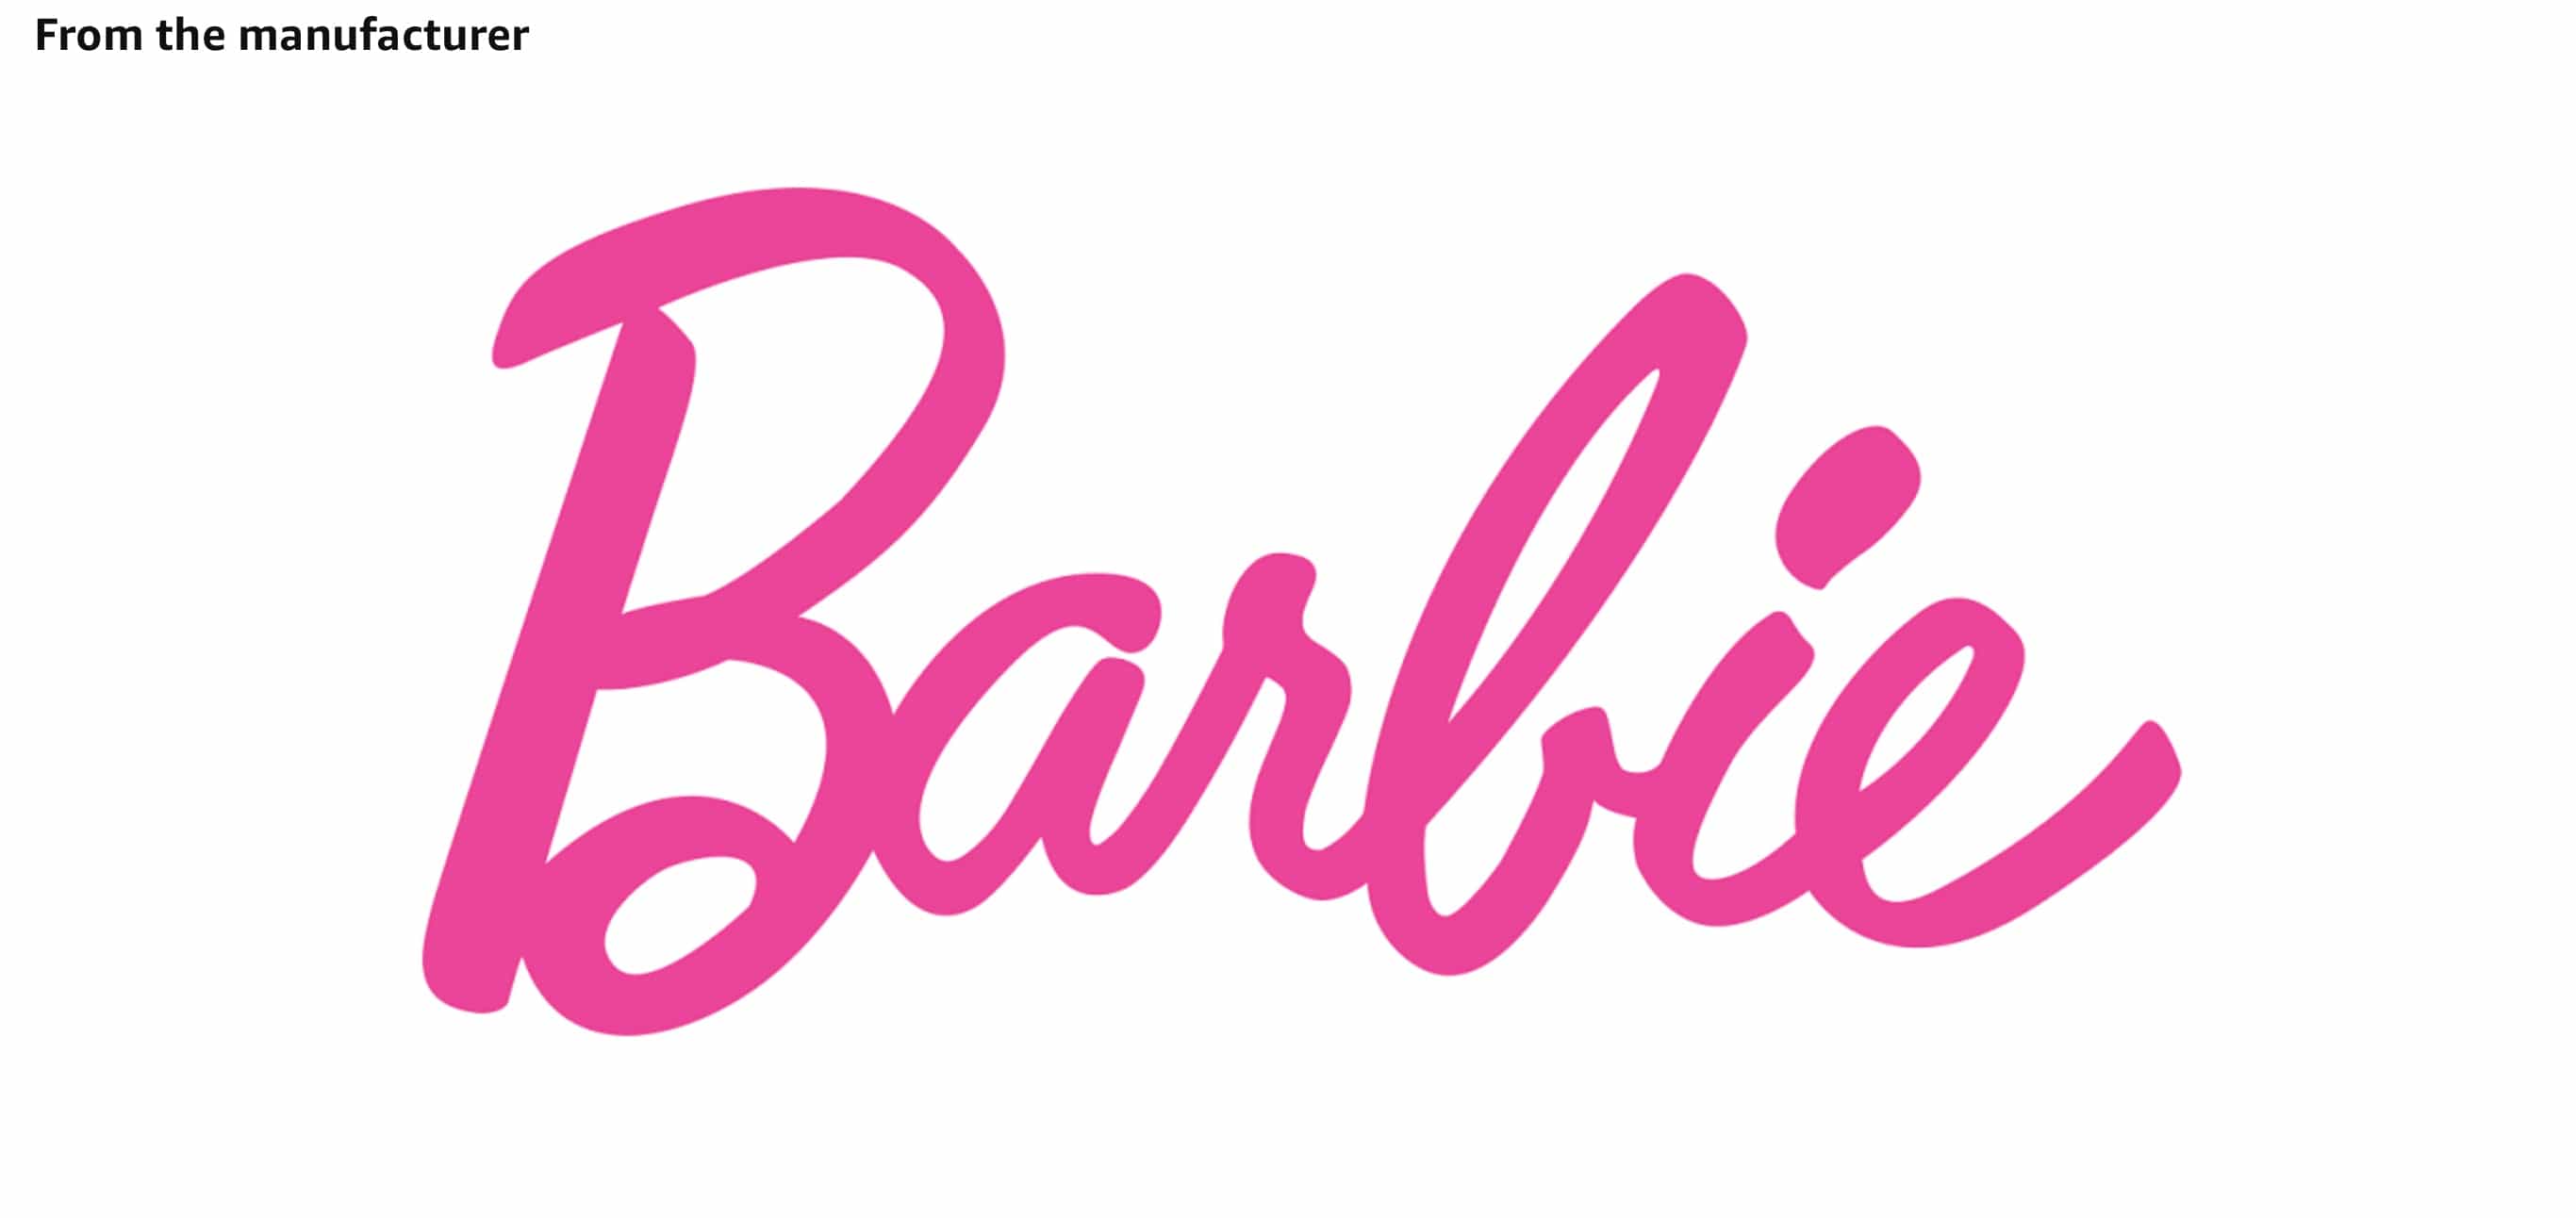 Barbie Blue Brunette Beach Doll